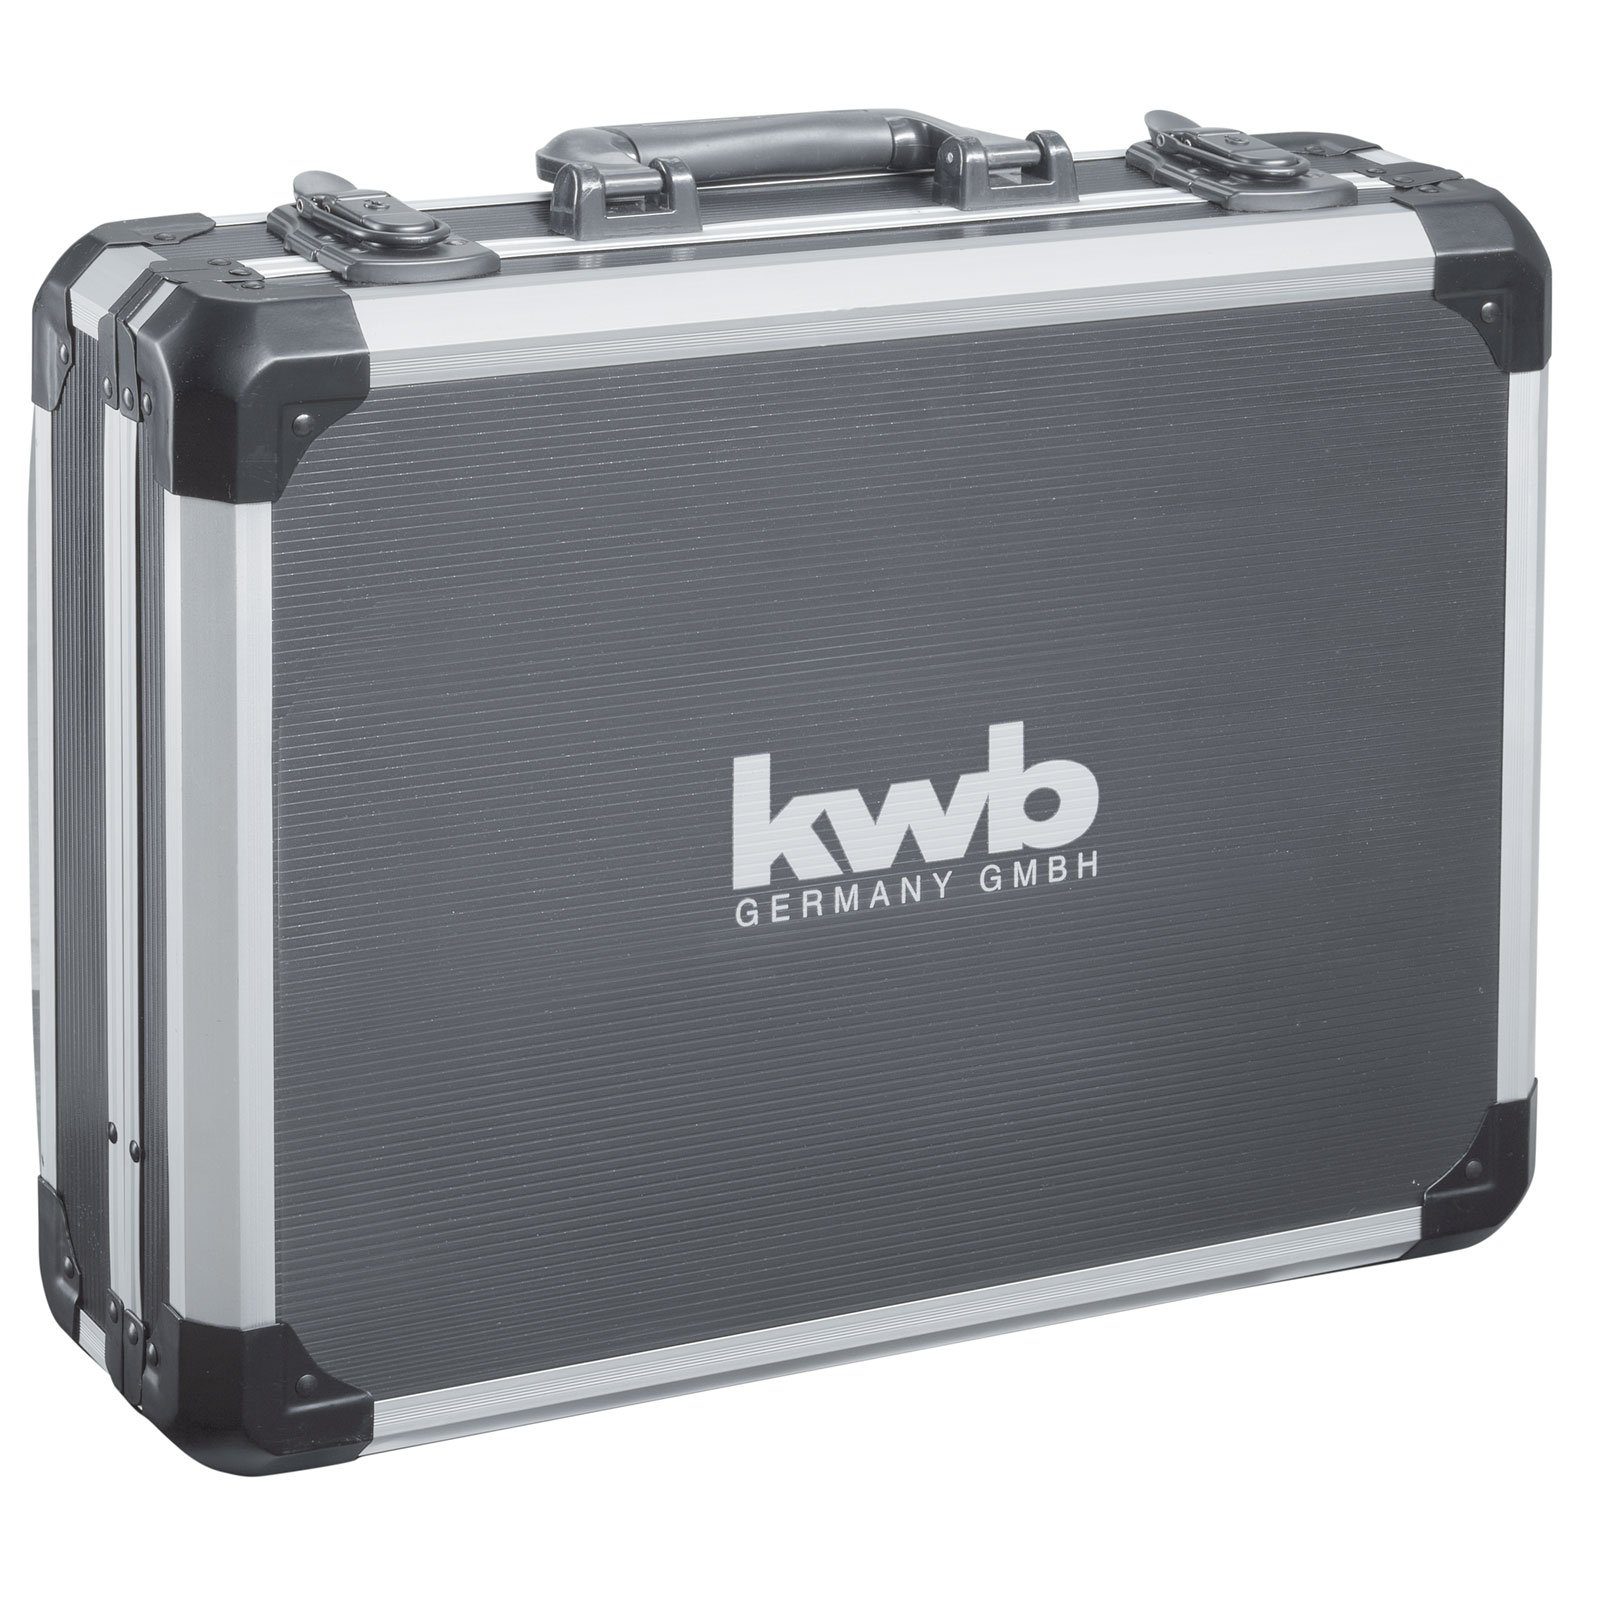 kwb inkl. gefüllt, kwb -teilig, (Set) Werkzeugset robust, Werkzeug-Koffer 80 Werkzeug-Set,